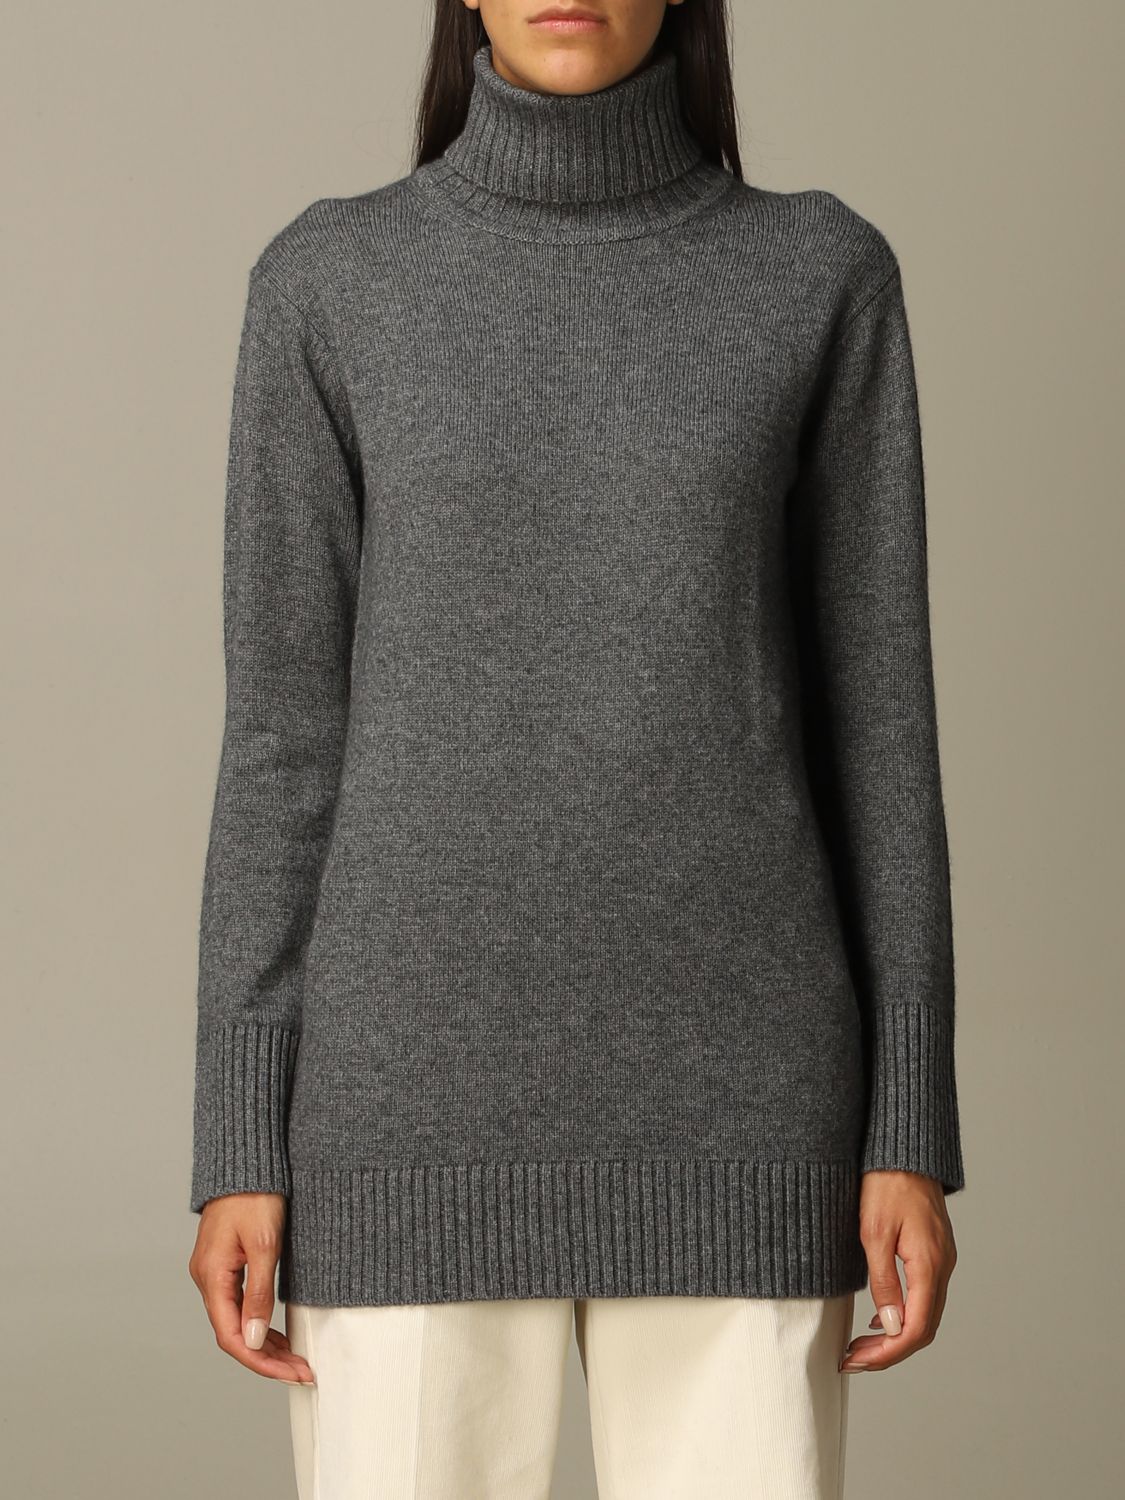 MAX MARA: Nastro pullover in wool and cashmere - Grey | Max Mara 